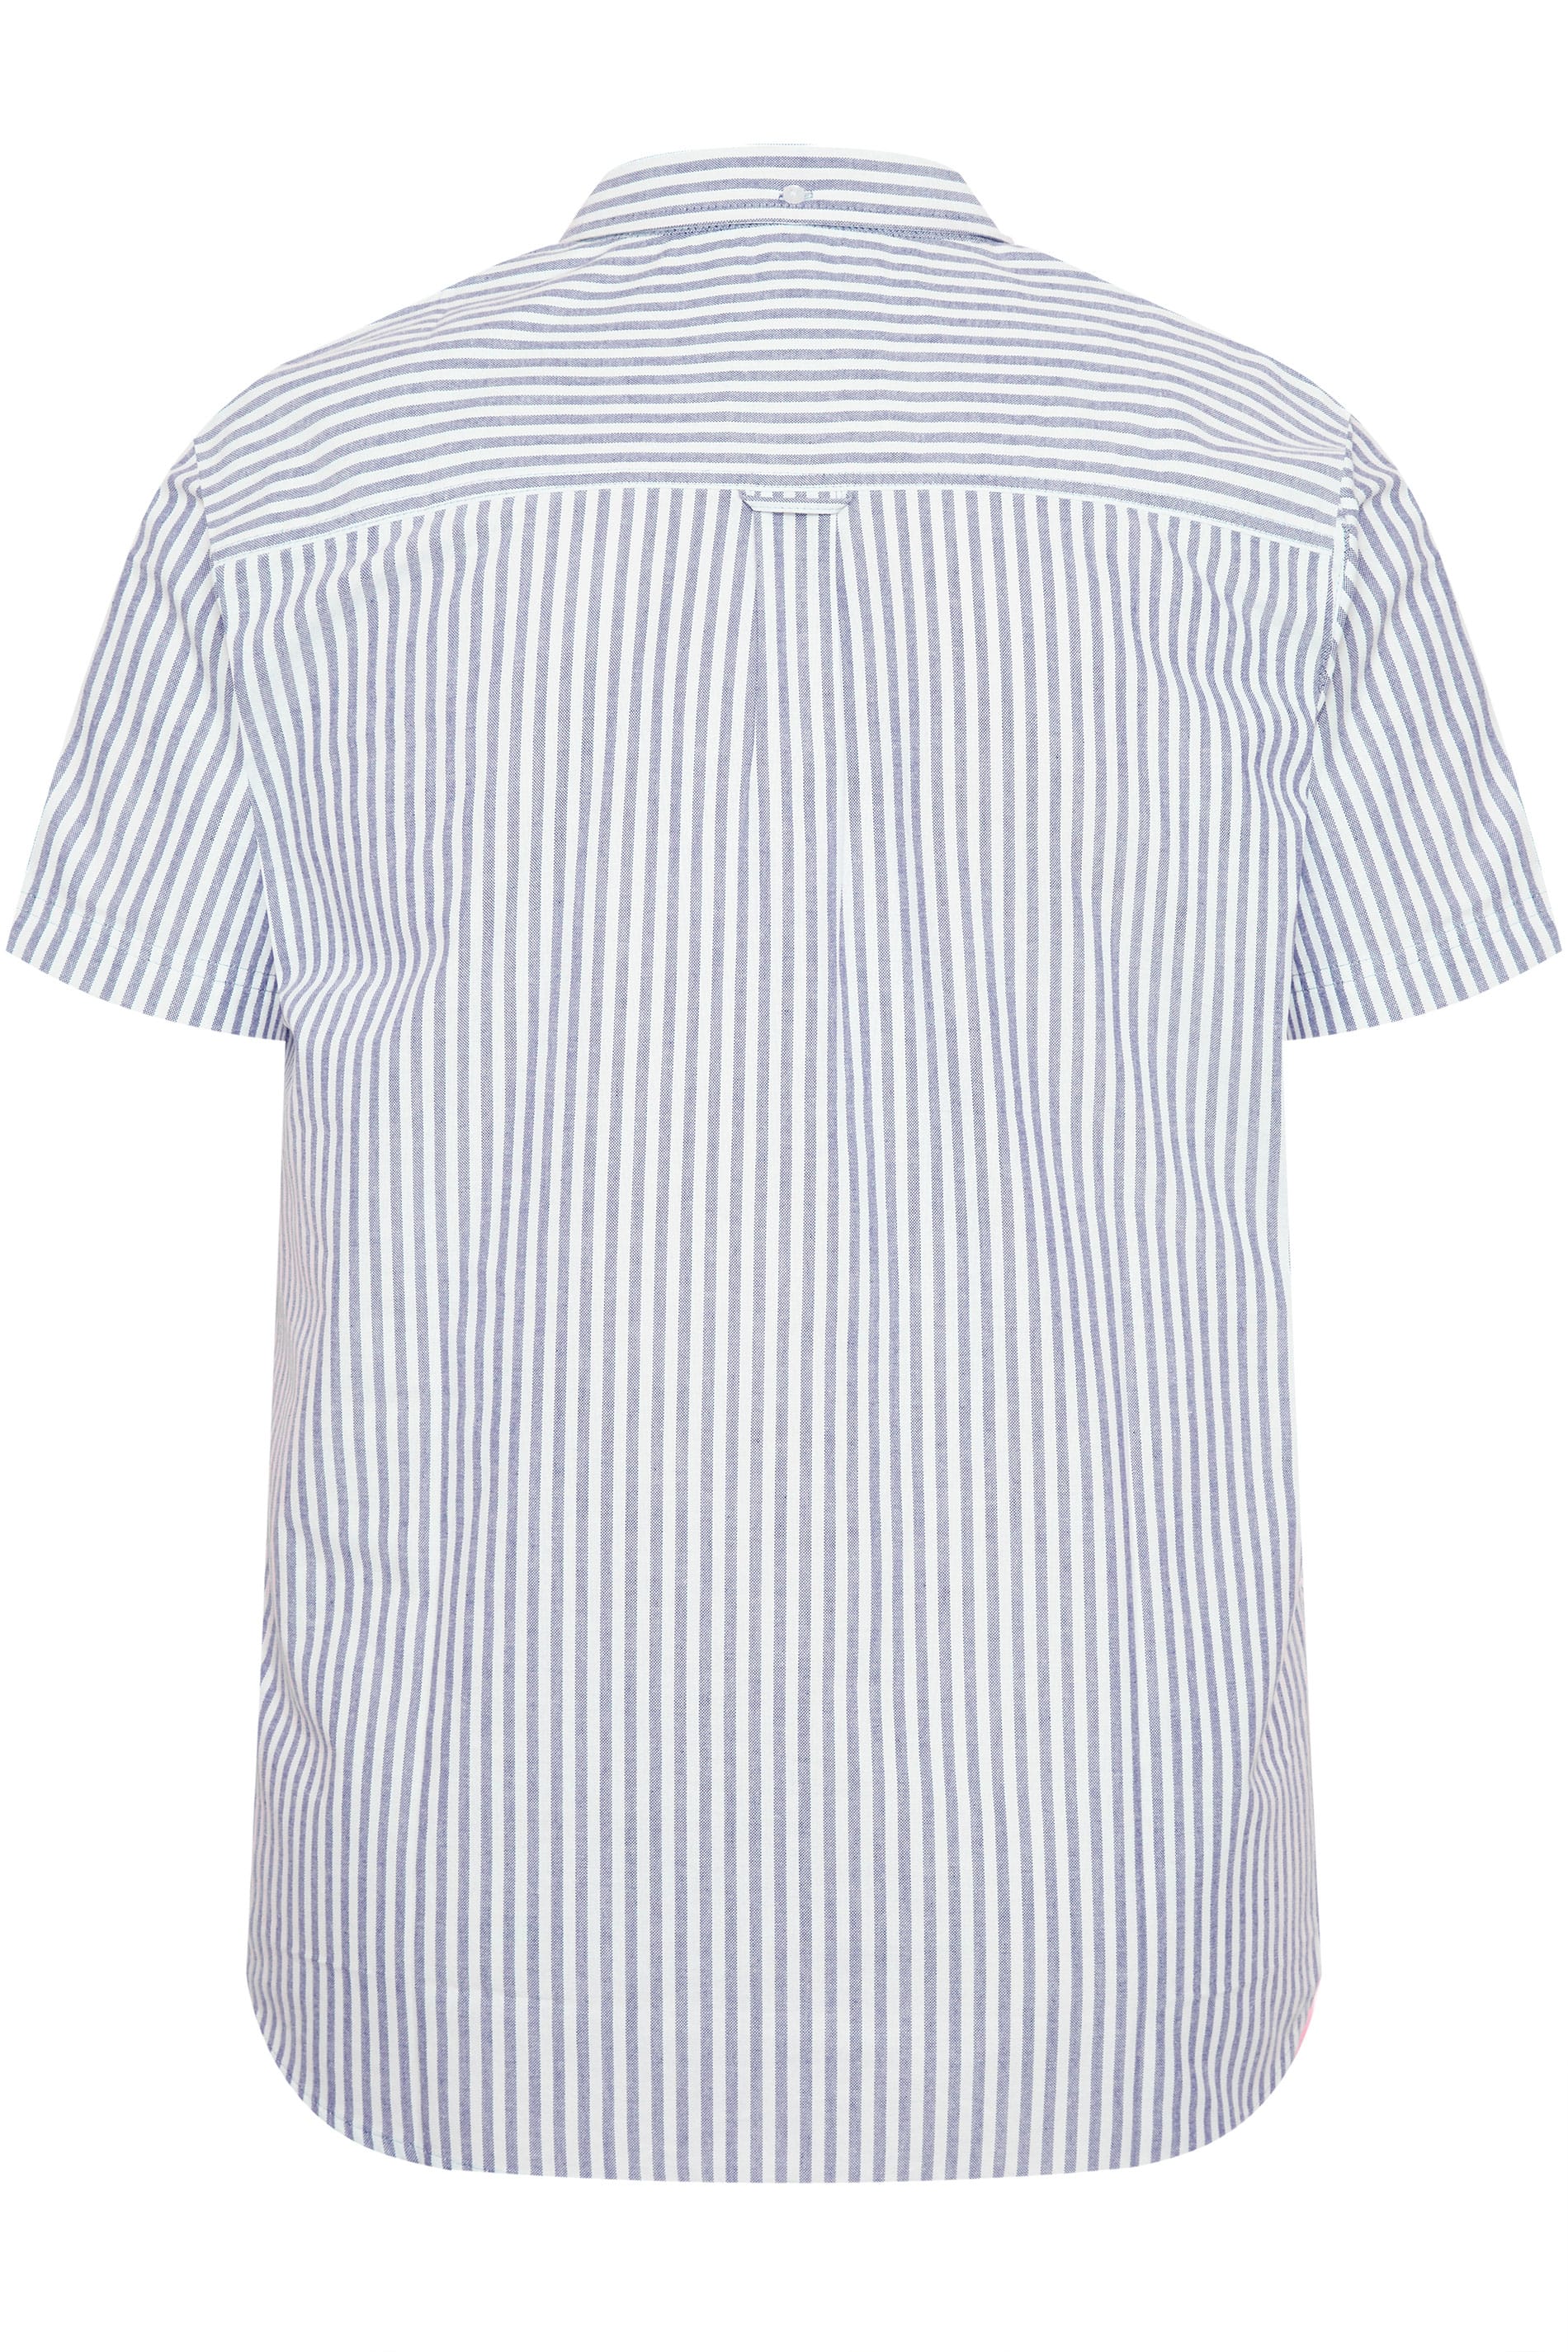 BadRhino Blue Striped Short Sleeved Oxford Shirt | BadRhino